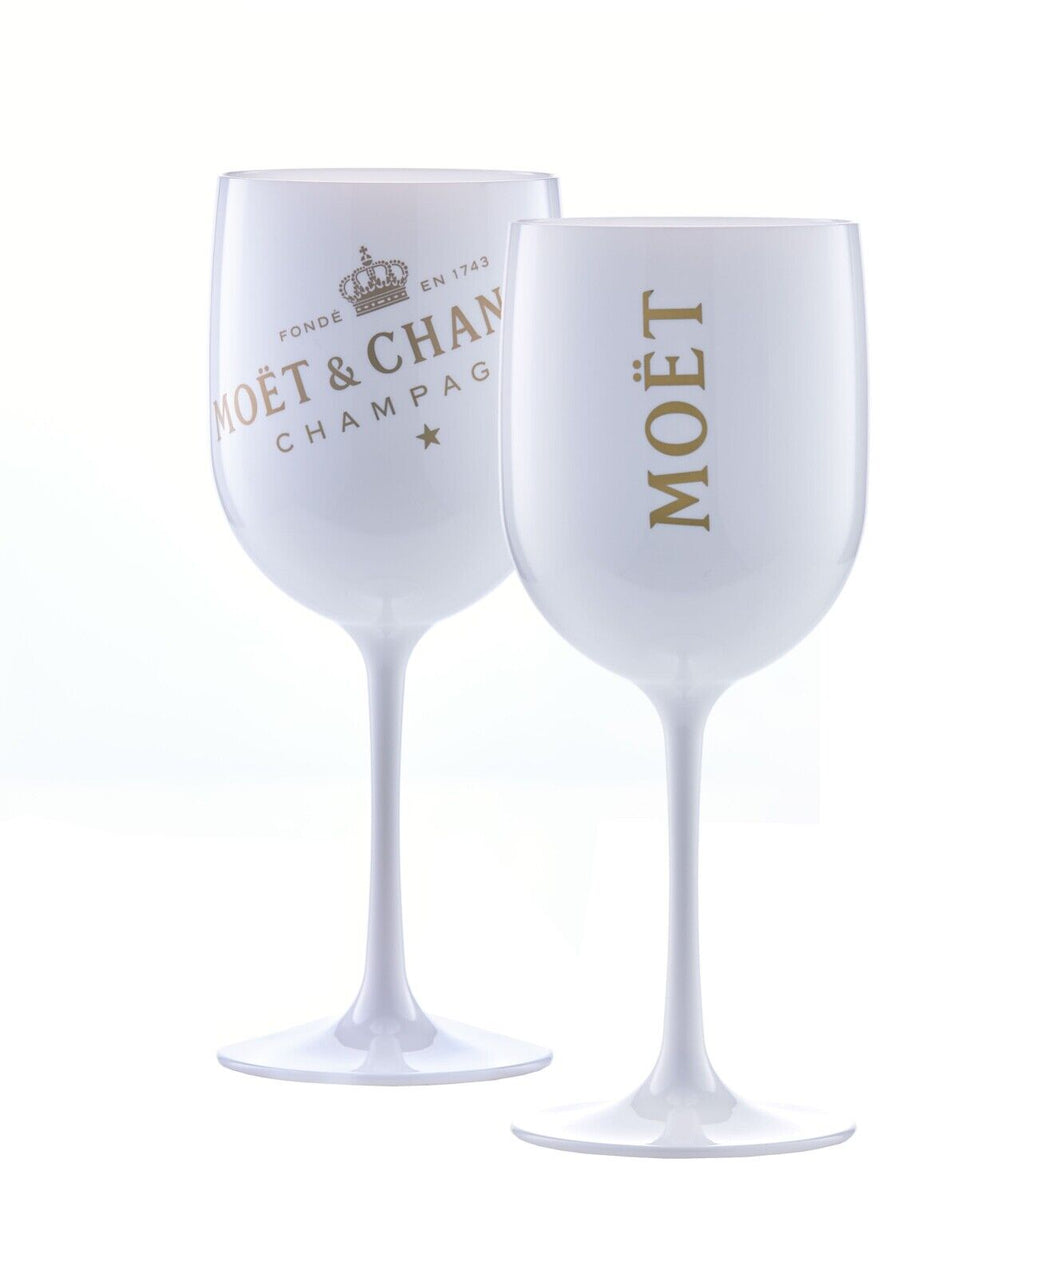 Champagner Gläser MOËT & CHANDON